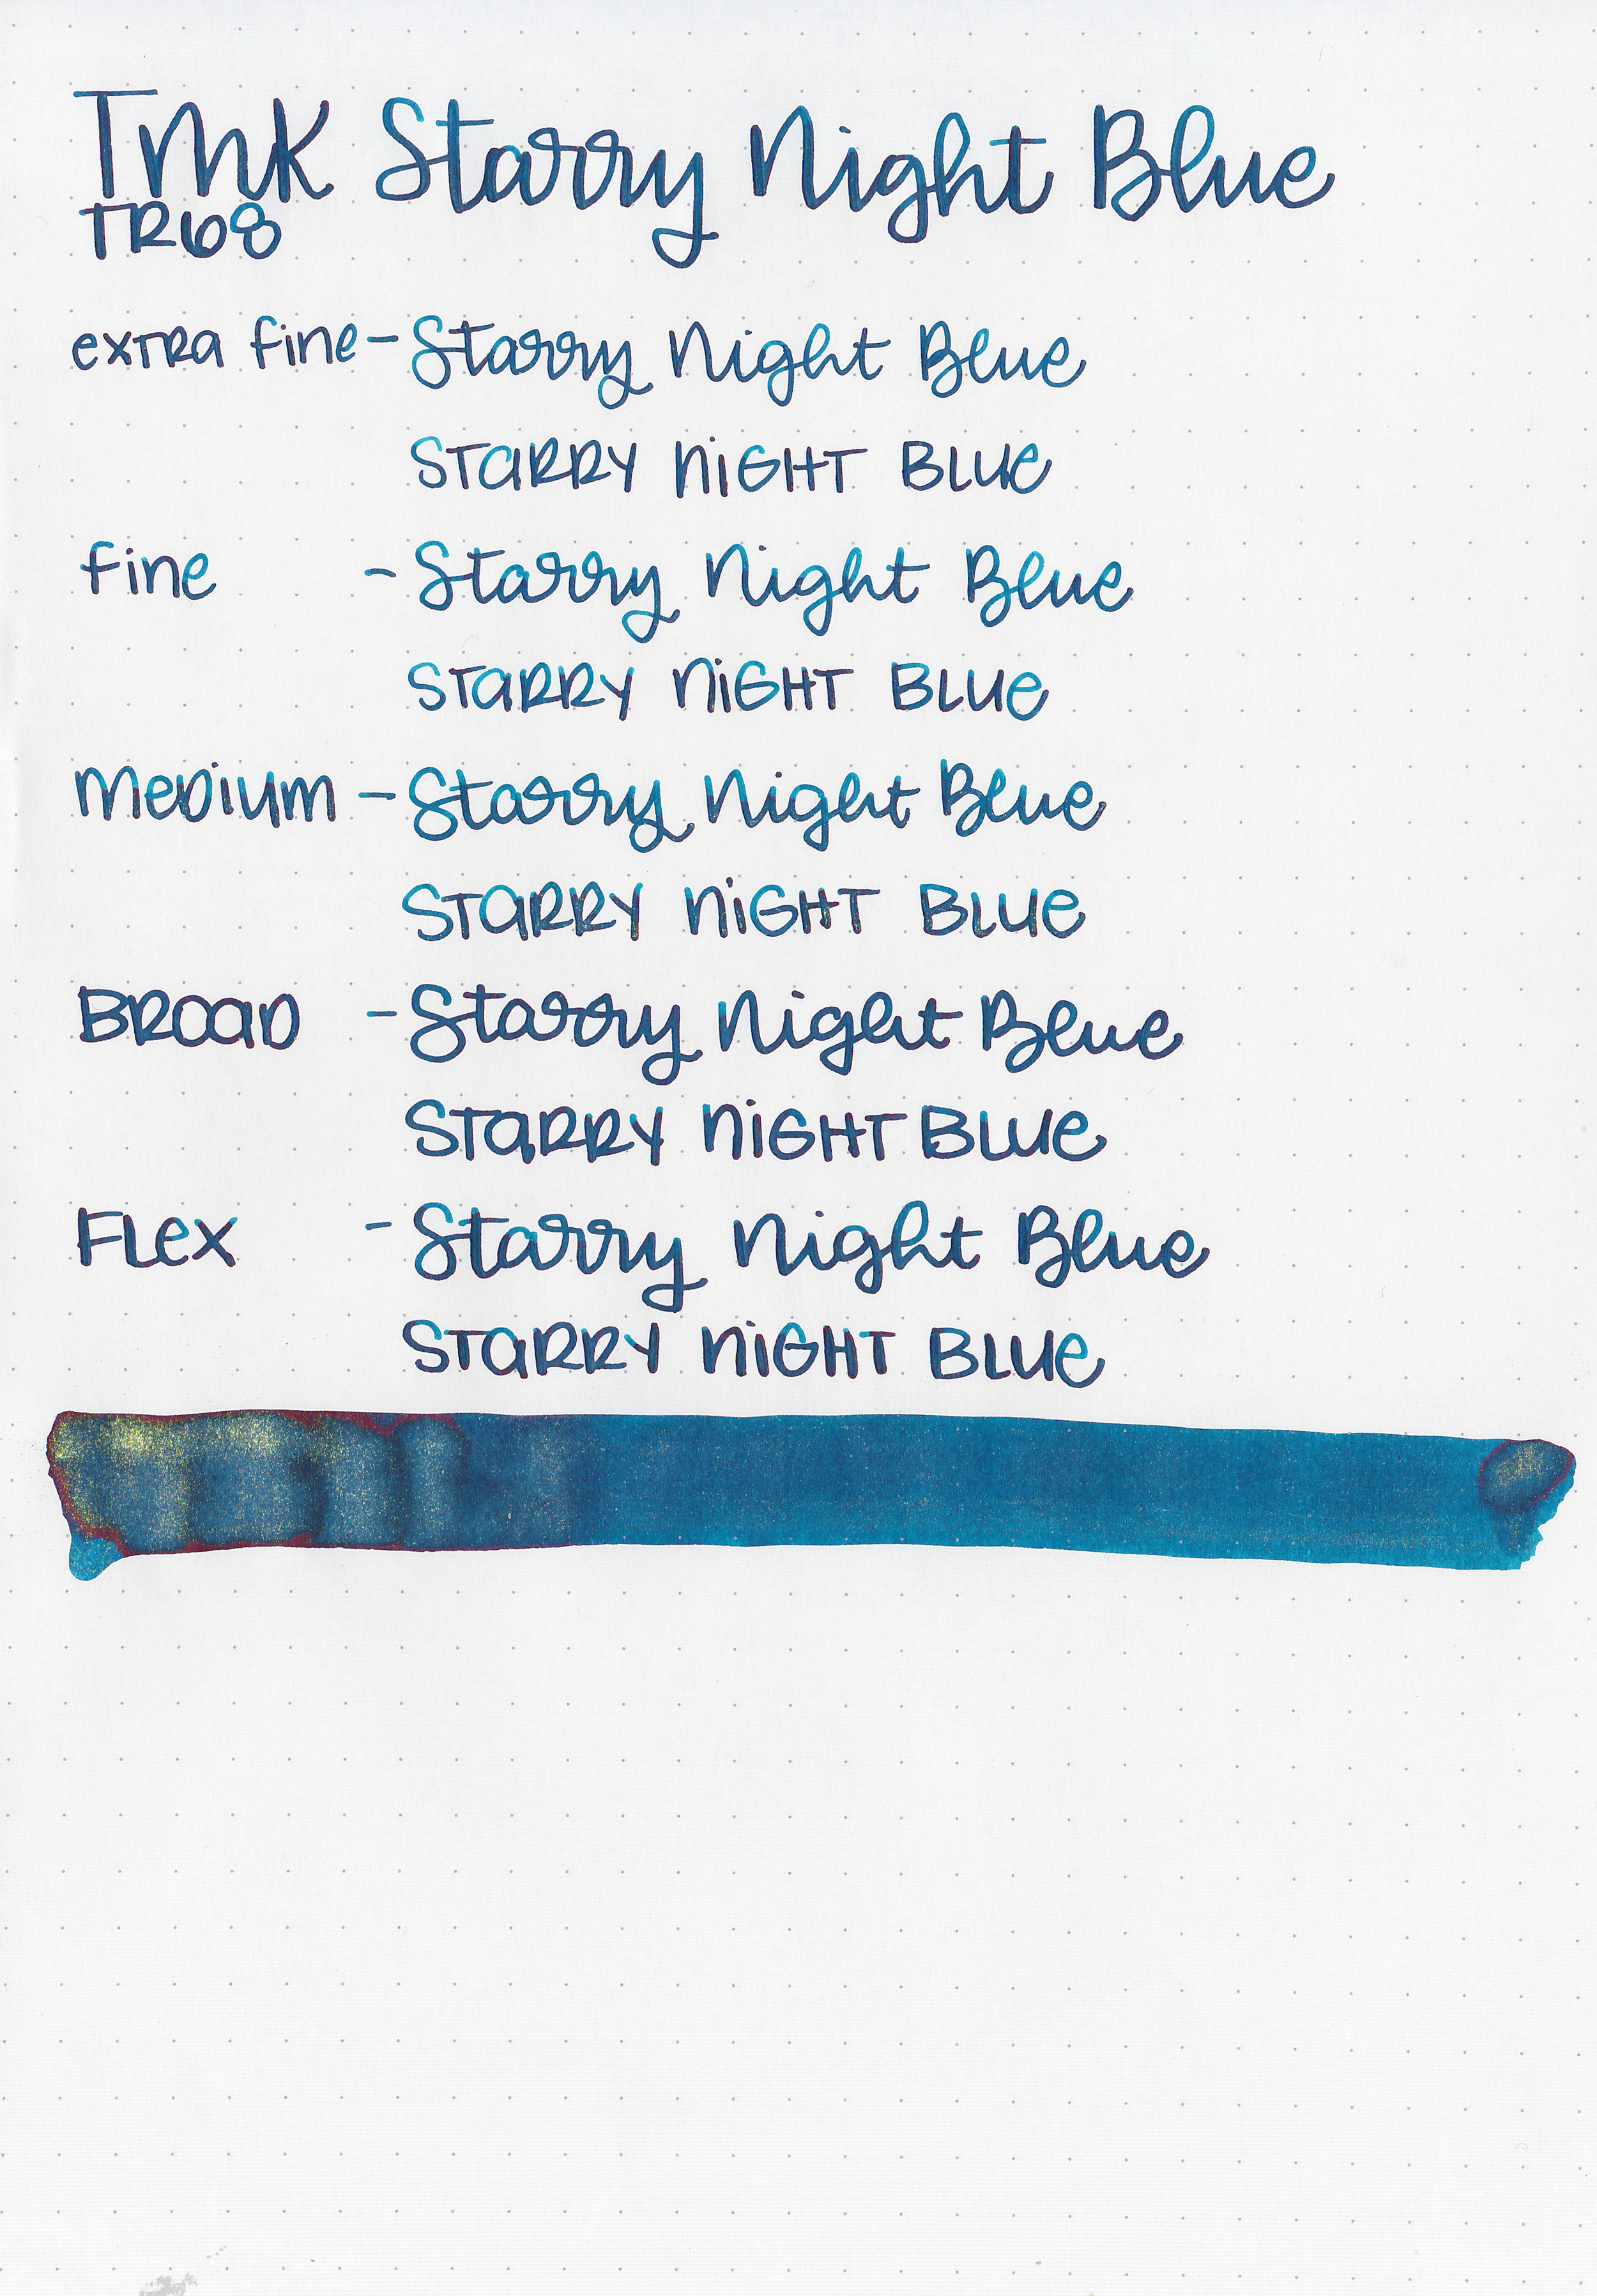 tbm-starry-night-blue-7.jpg